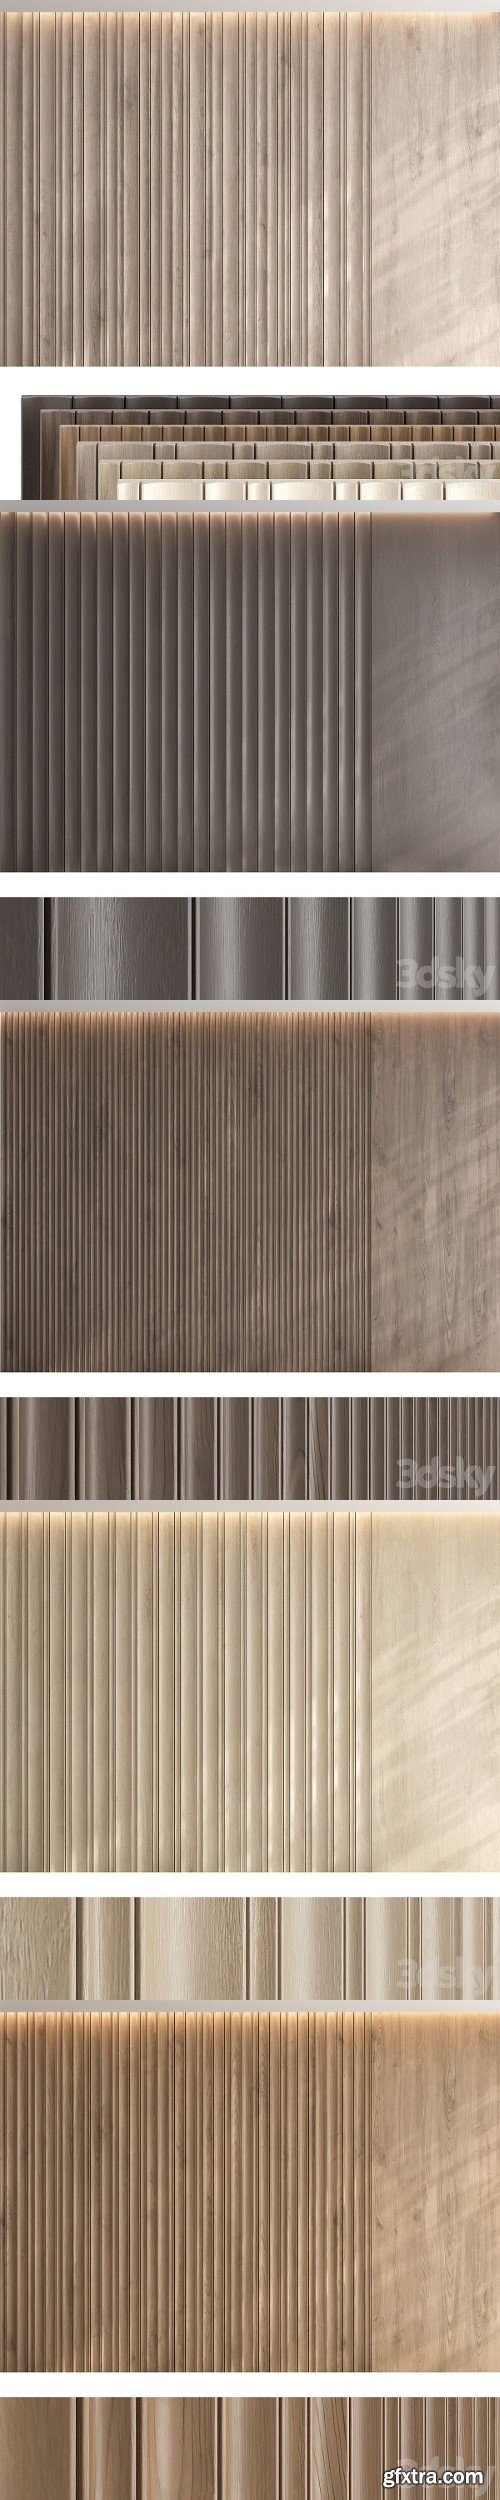 Wood Panel Set V 07 | Vray+Corona